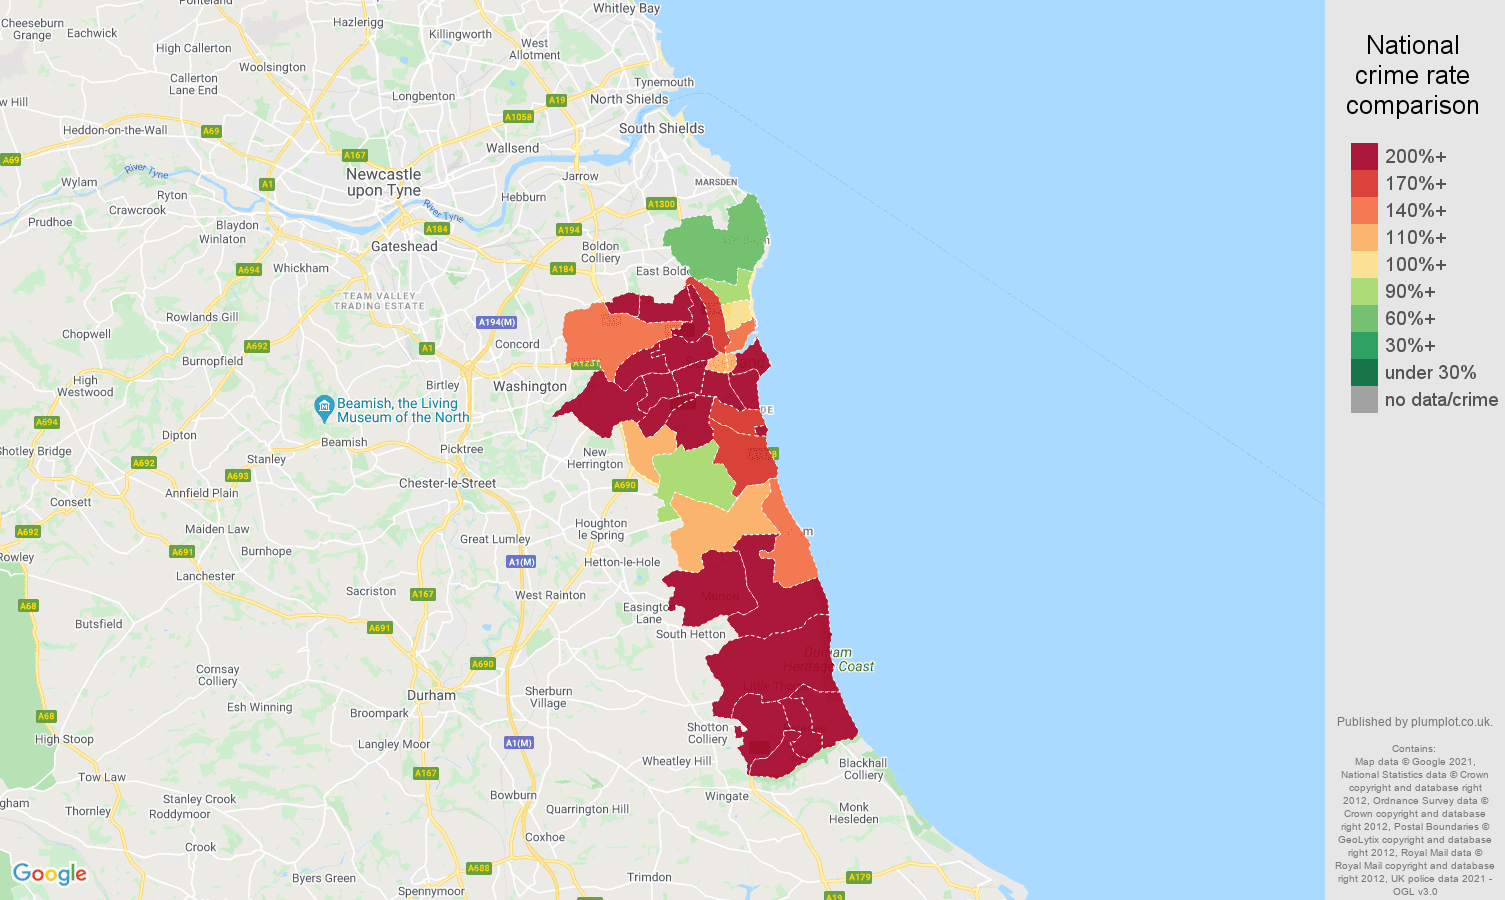 Sunderland criminal damage and arson crime rate comparison map